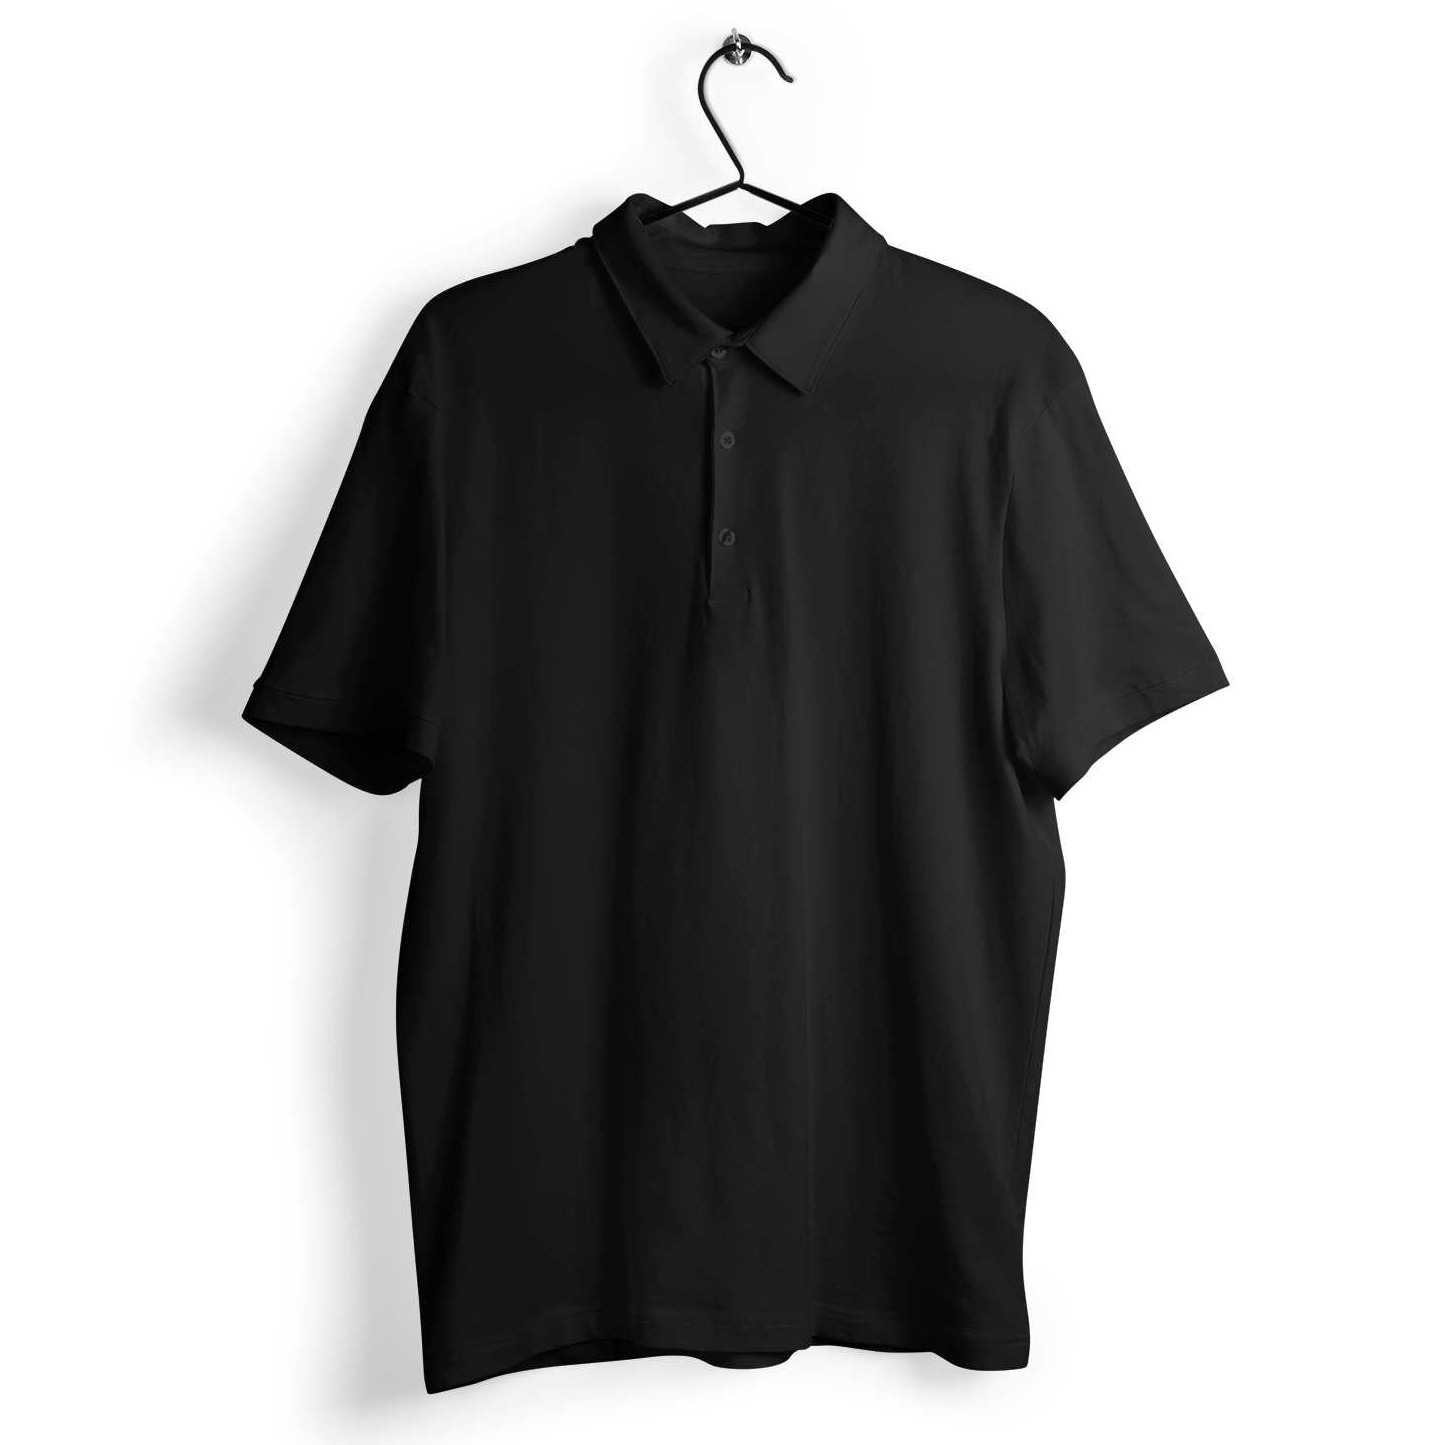 black polo t-shirt plain black collar t-shirts the banyan tee 100% cotton polo t-shirts